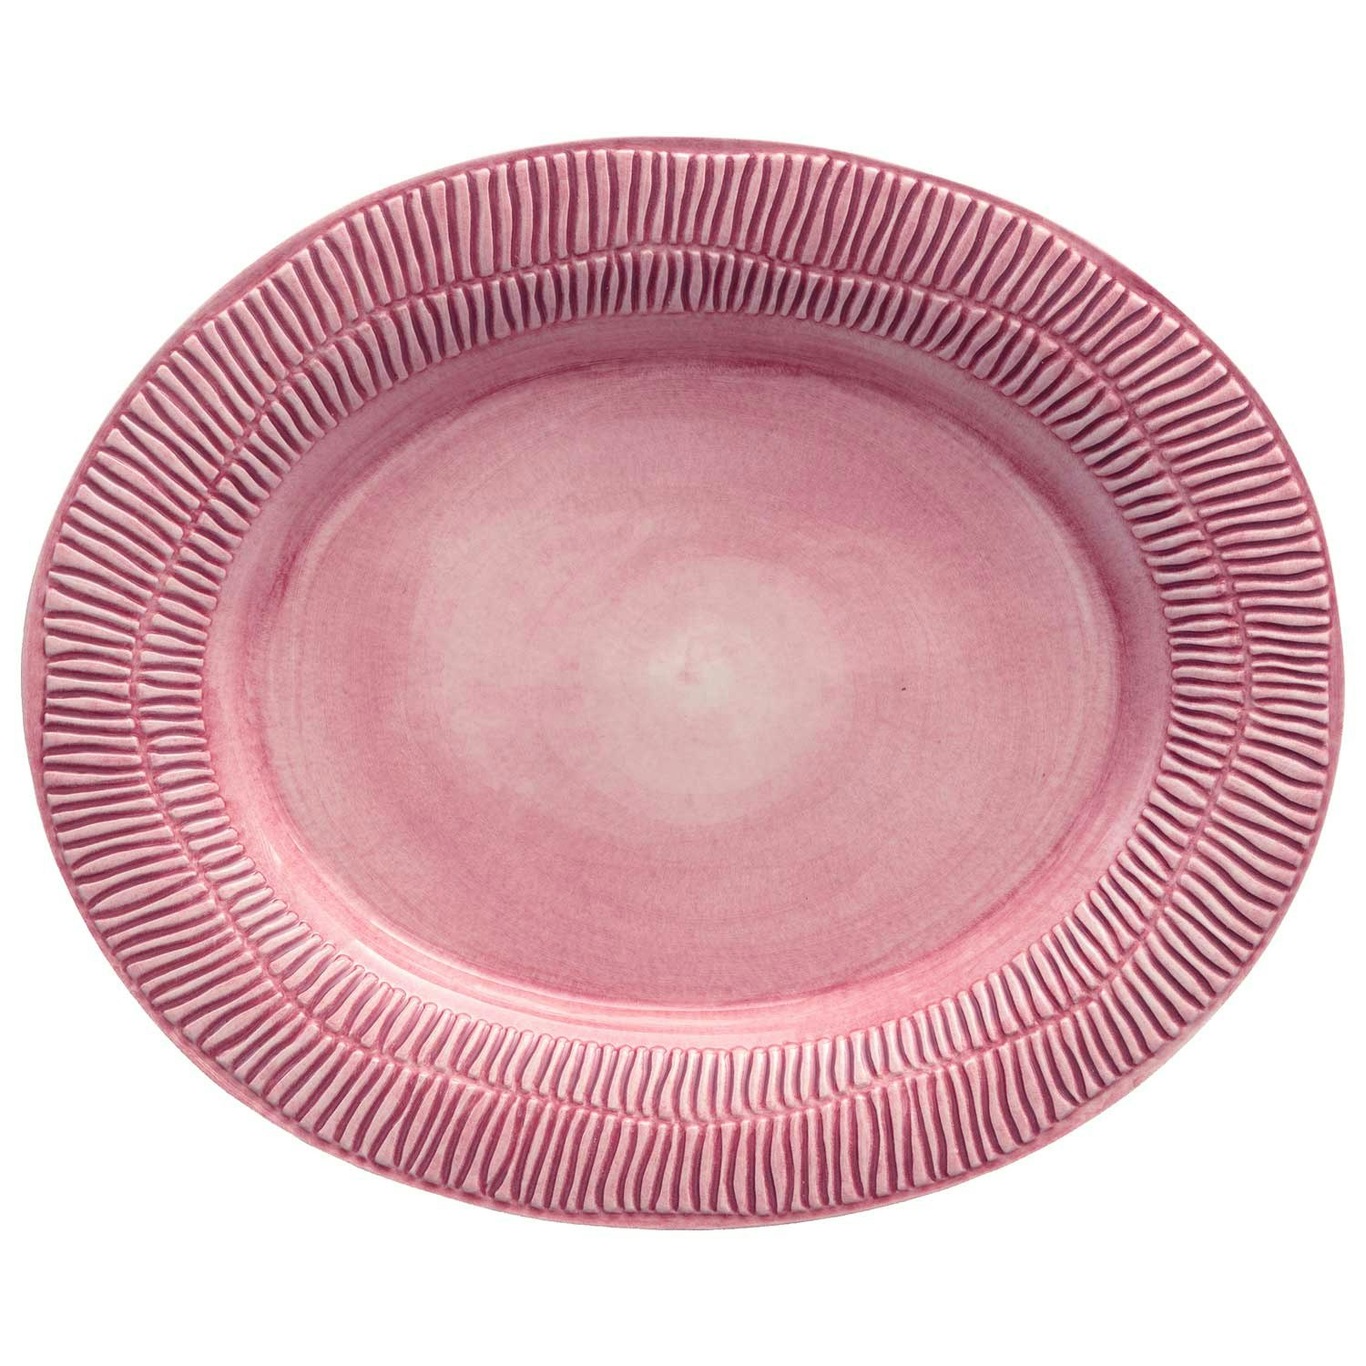 Stripes Platte 35x30 cm, Pink